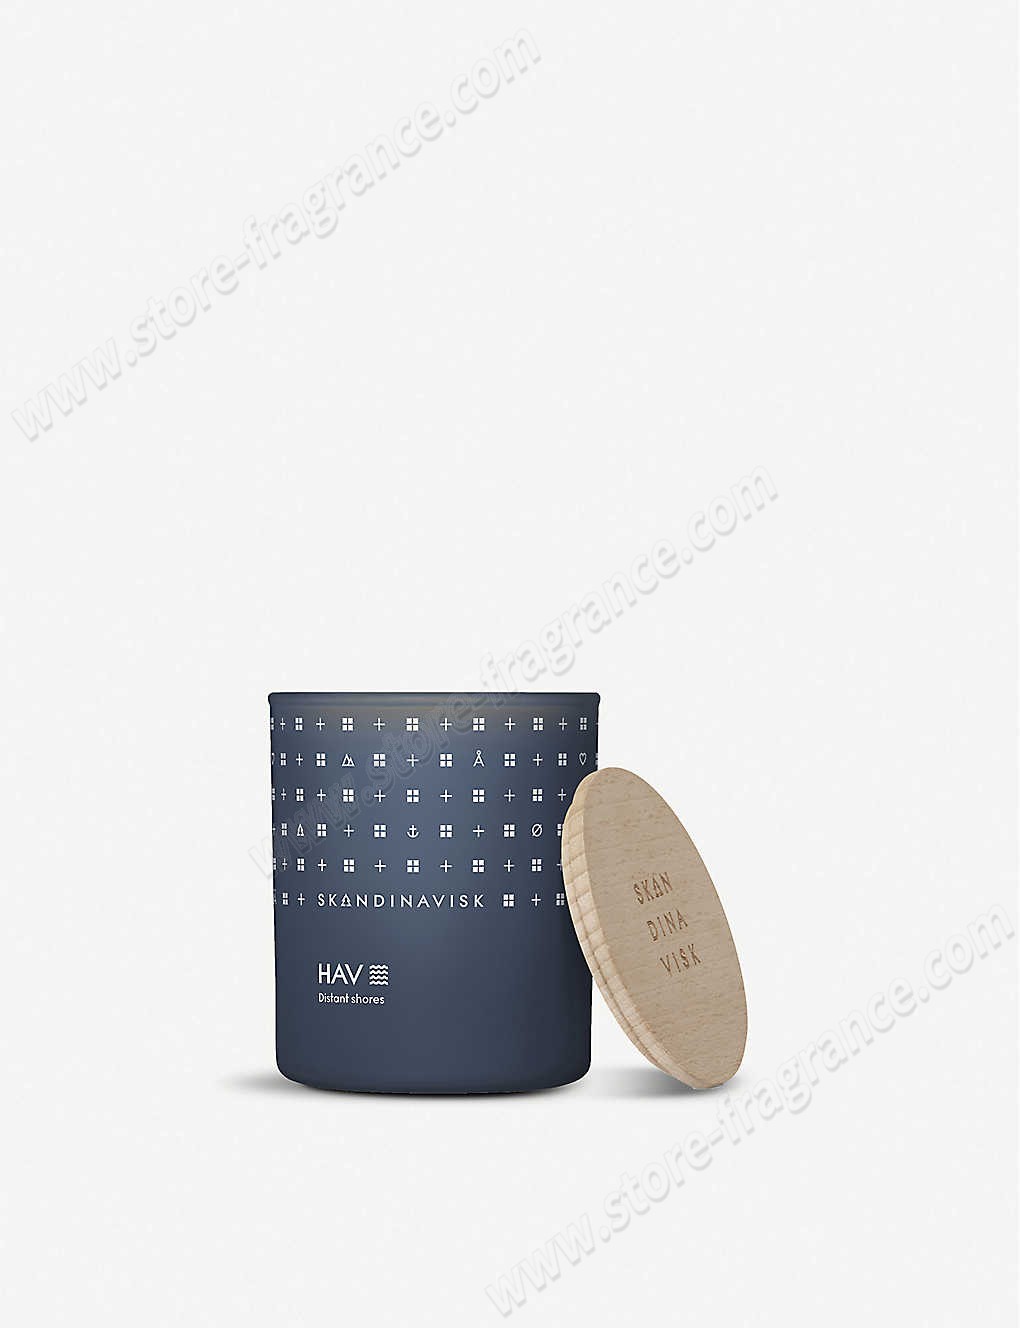 SKANDINAVISK/HAV scented candle with lid 200g ✿ Discount Store - SKANDINAVISK/HAV scented candle with lid 200g ✿ Discount Store